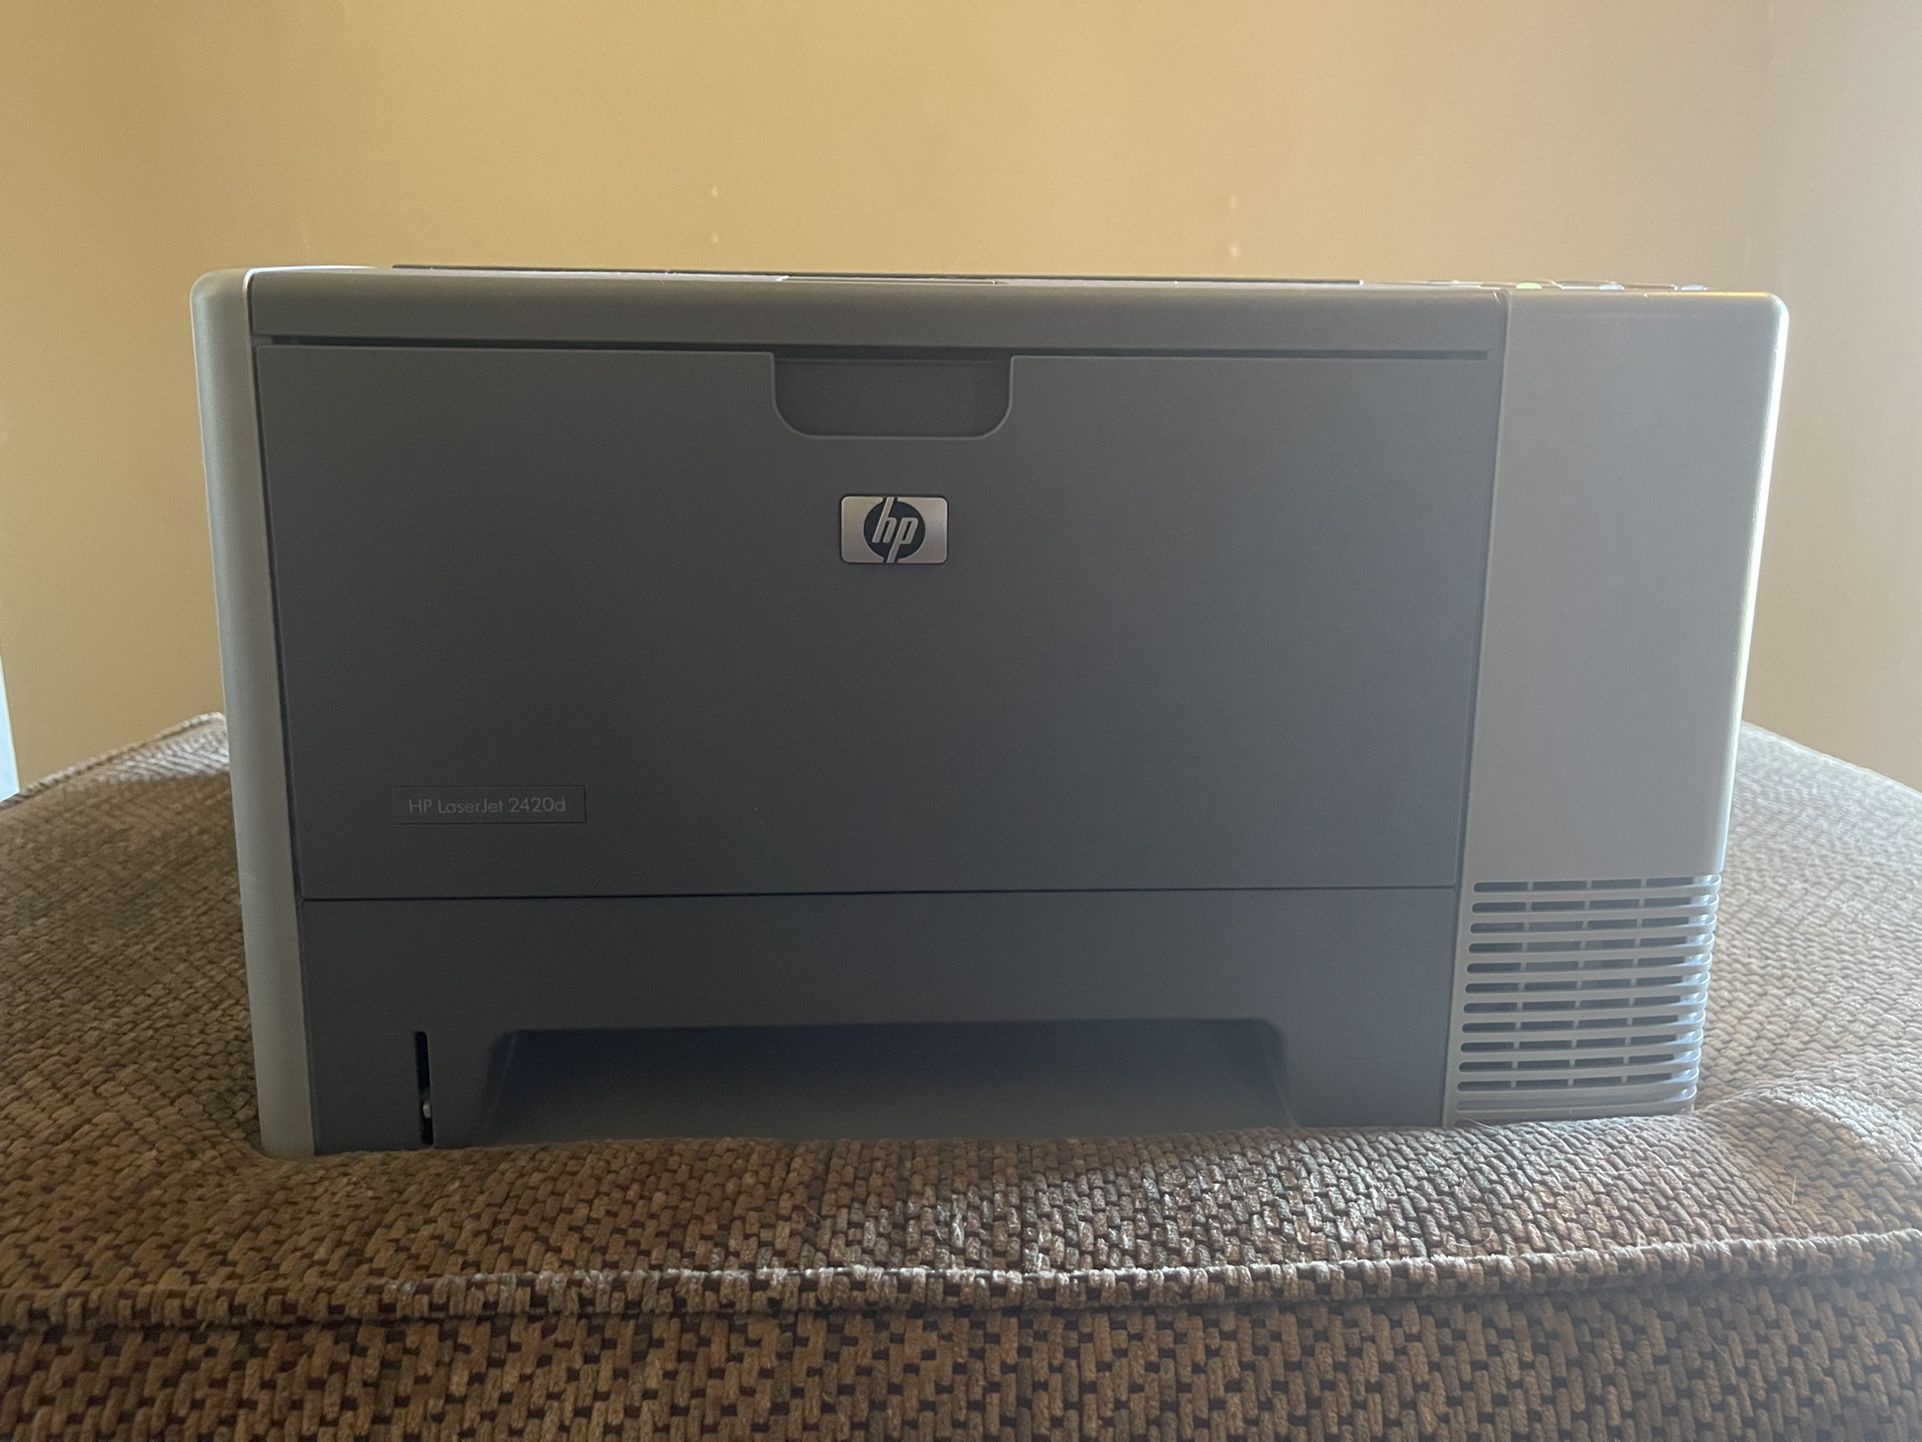 HP 2420 LaserJet Printer